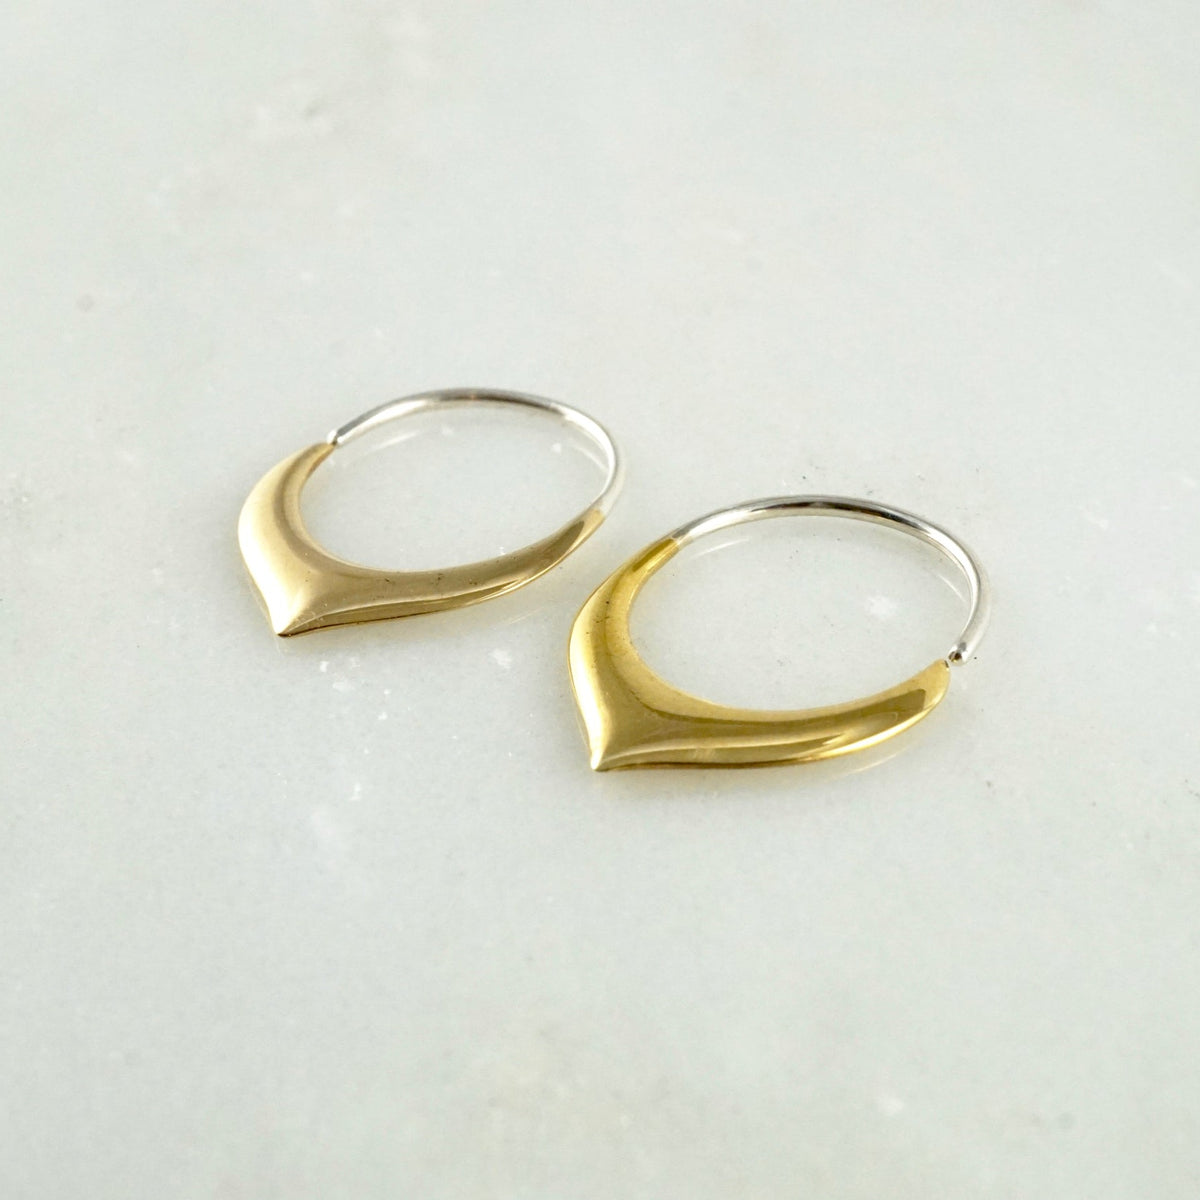 Tiny Petal Hoop Earrings - Gold Tone with 925 Sterling Ear Wire - Sleeper Hoops (B240)